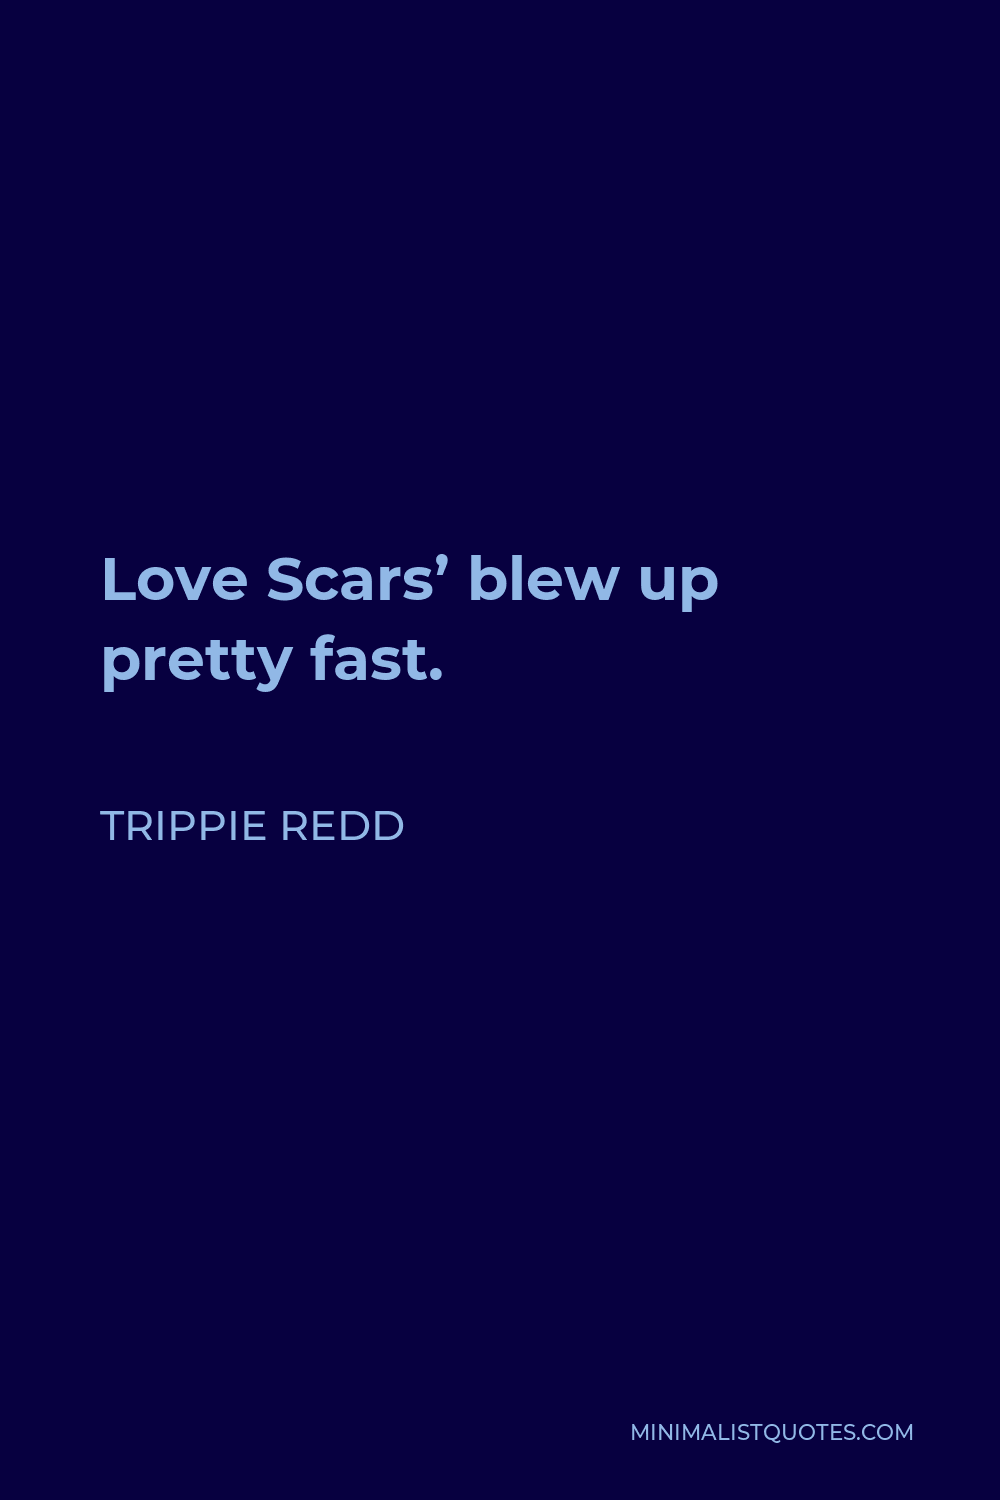 Trippie Redd Quote - Love Scars’ blew up pretty fast.